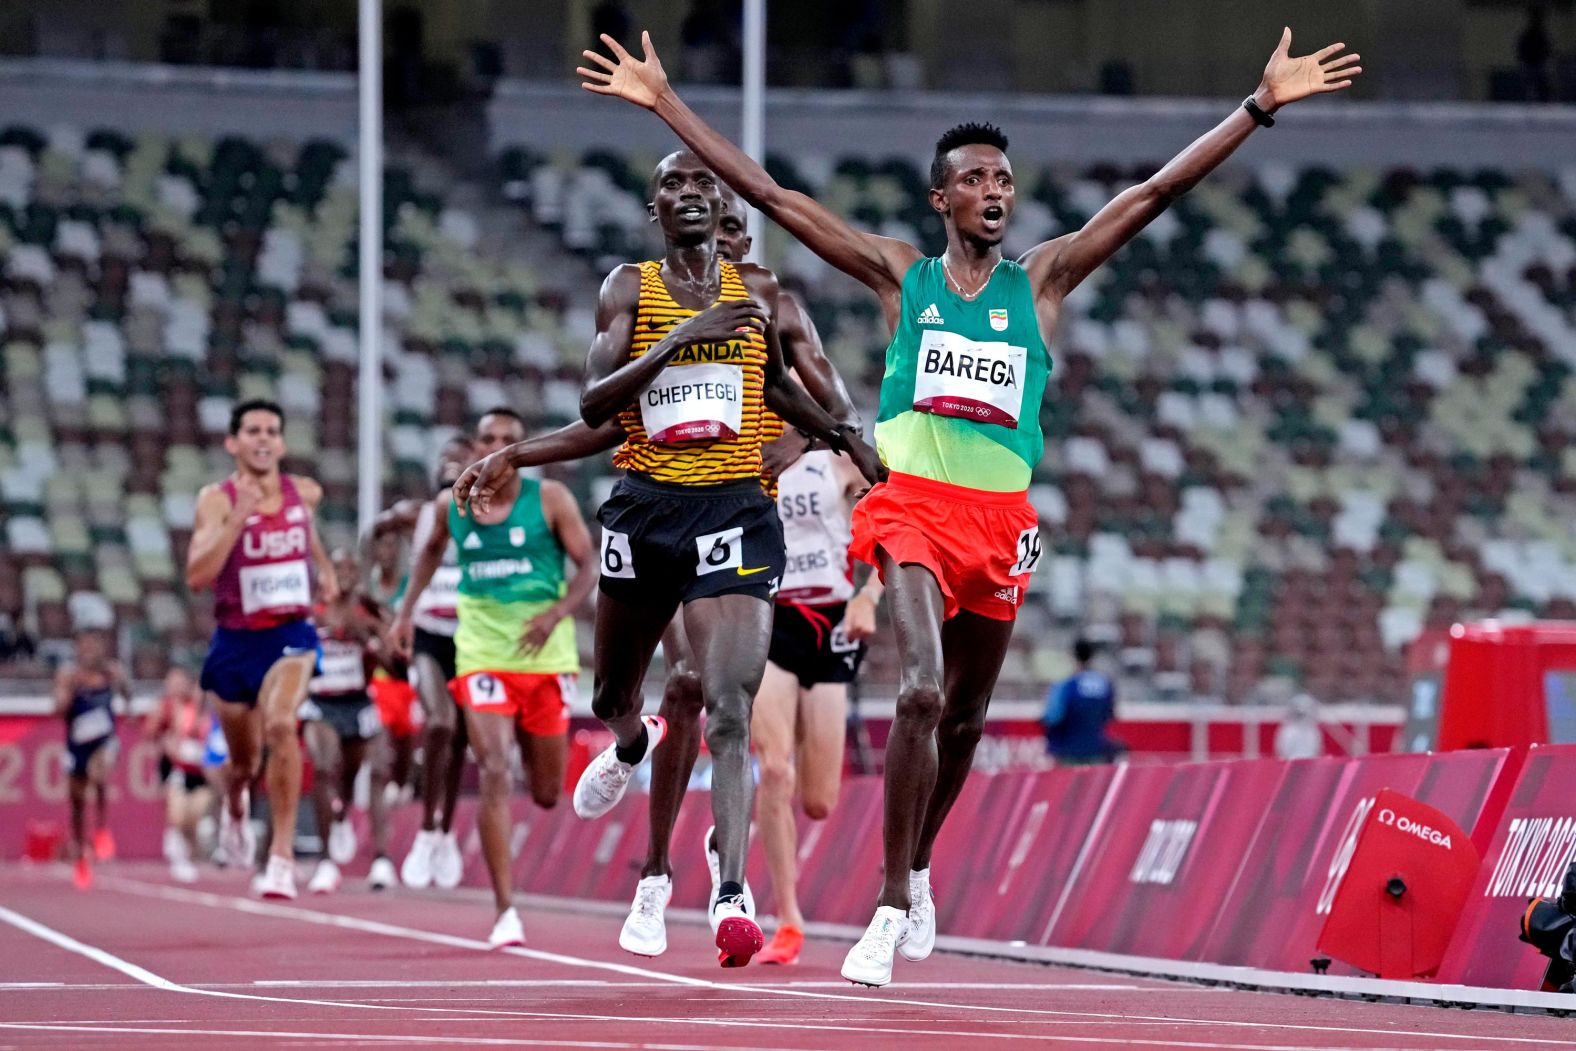 Ethiopia's Selemon Barega <a href="index.php?page=&url=https%3A%2F%2Fwww.cnn.com%2F2021%2F07%2F30%2Fsport%2Fselemon-barega-tokyo-olympics-spt-intl%2Findex.html" target="_blank">won the 10,000 meters</a> on July 30 after a thrilling sprint on the final lap.